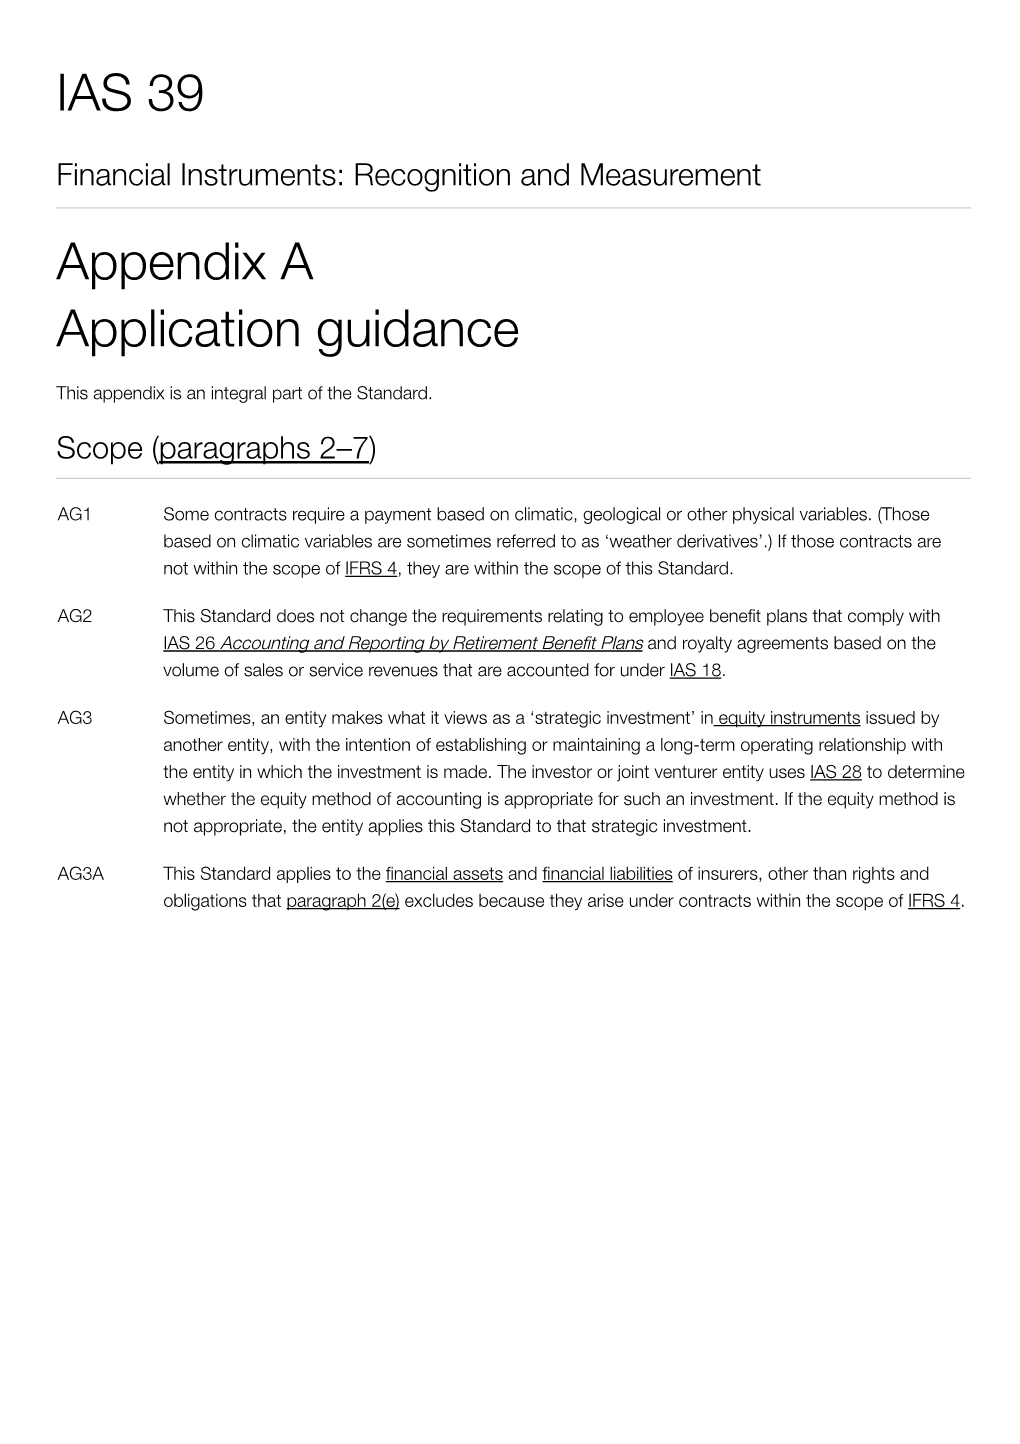 IAS 39 Appendix a Application Guidance